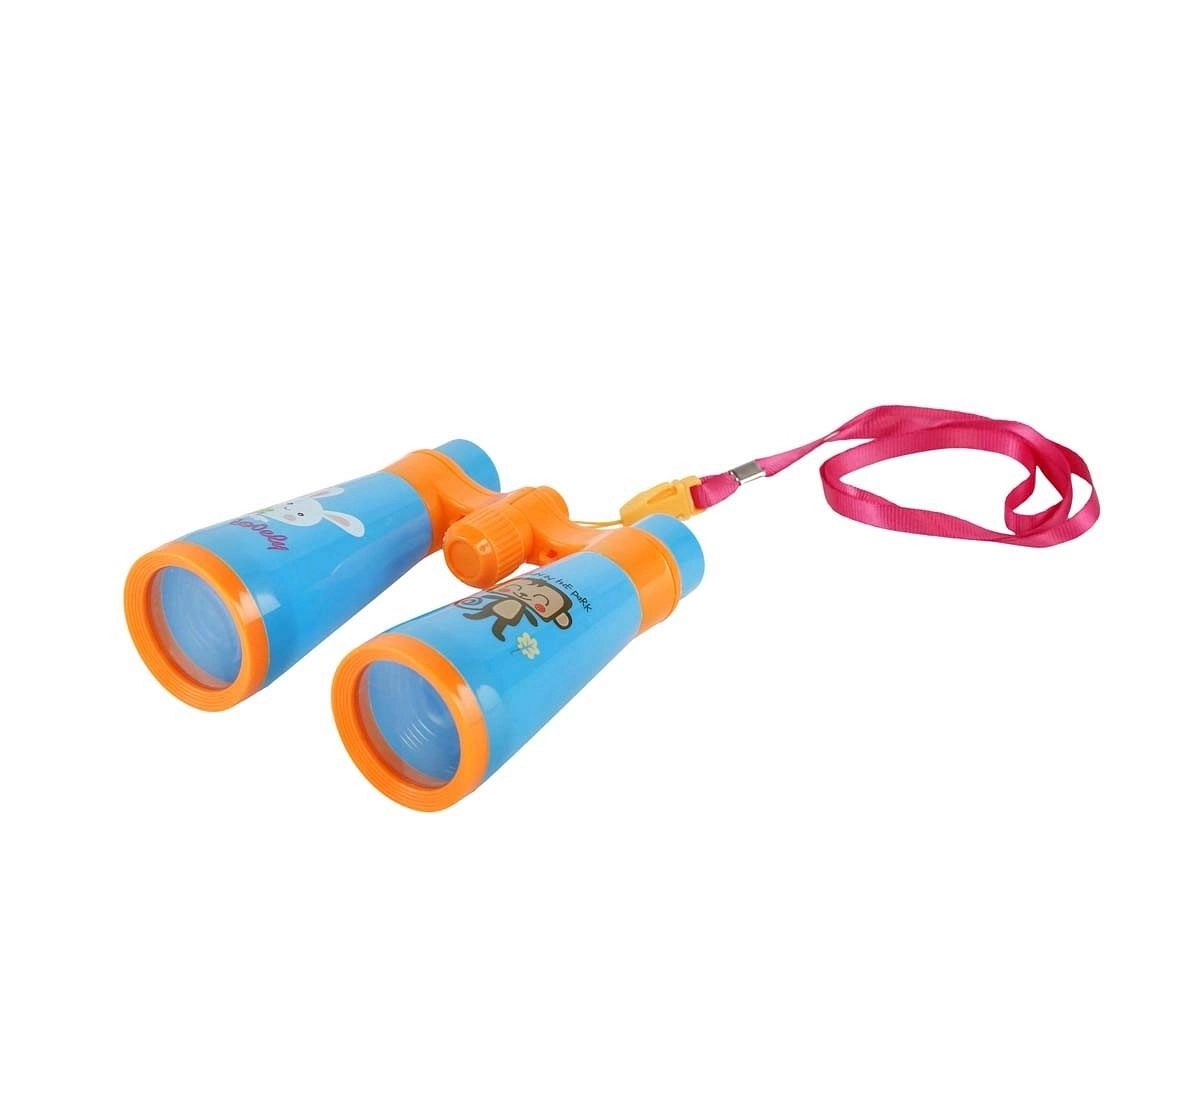 Comdaq Binoculars, Multi Color Science Equipments for Kids age 3Y+ 